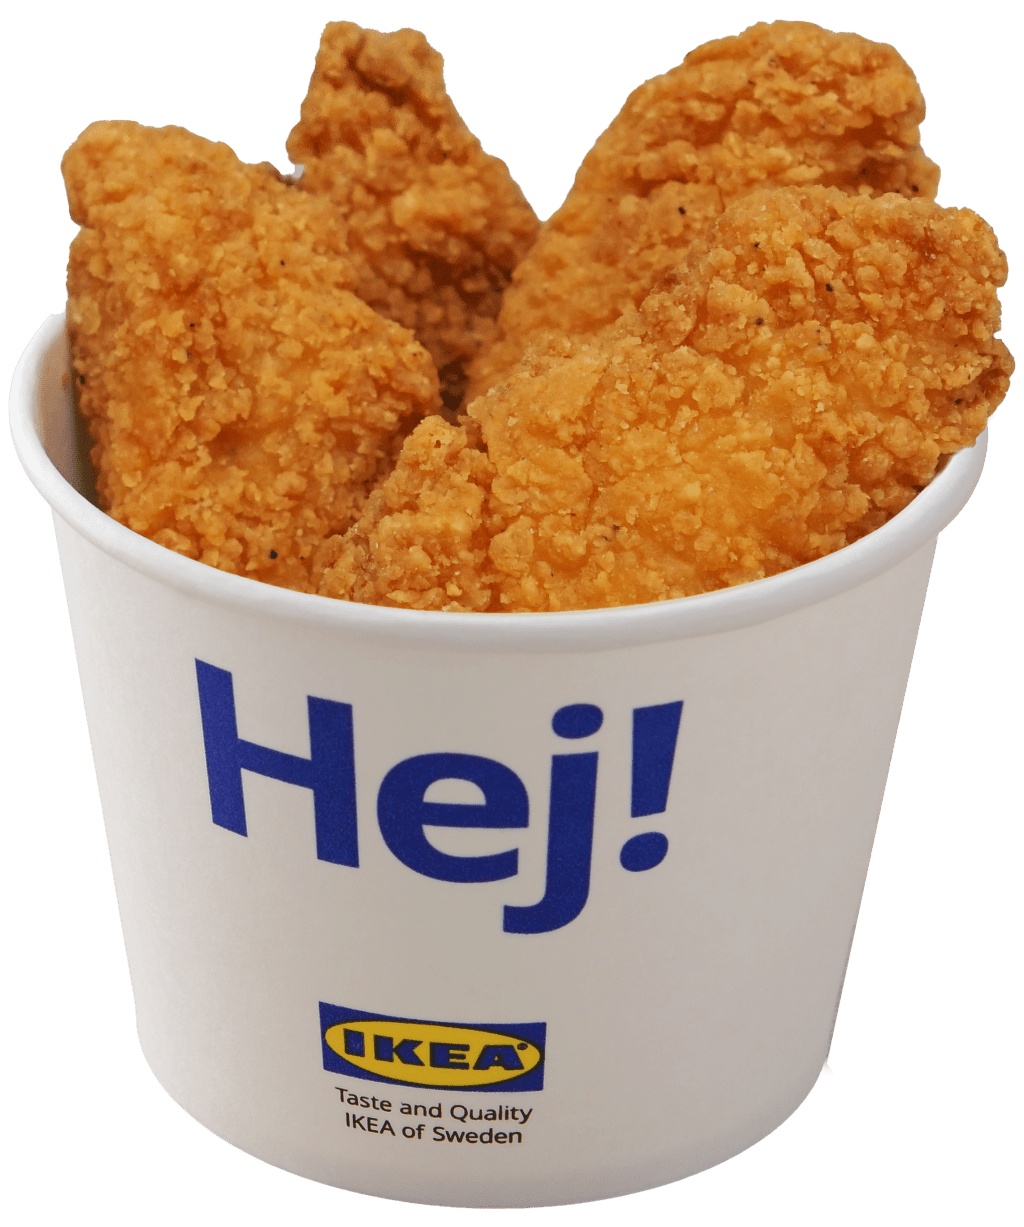 IKEA美食站避風塘脆雞柳/$16，焗至金黃色的雞柳配搭經典的港式避風塘風味，糅合香辣及蒜香。 